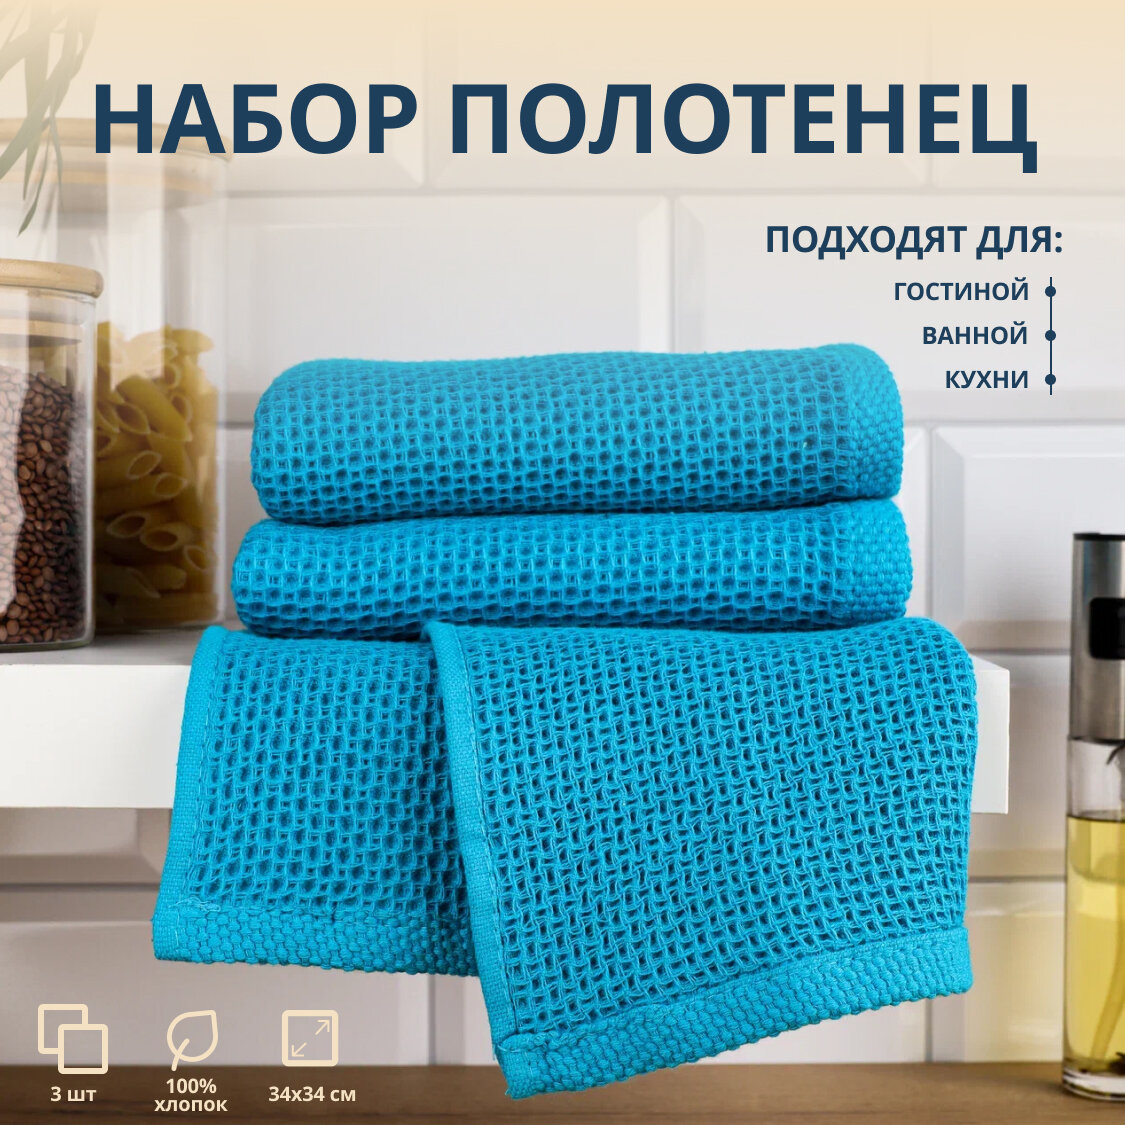 Кухонные полотенца, набор из 3 шт, размер 34*34см.